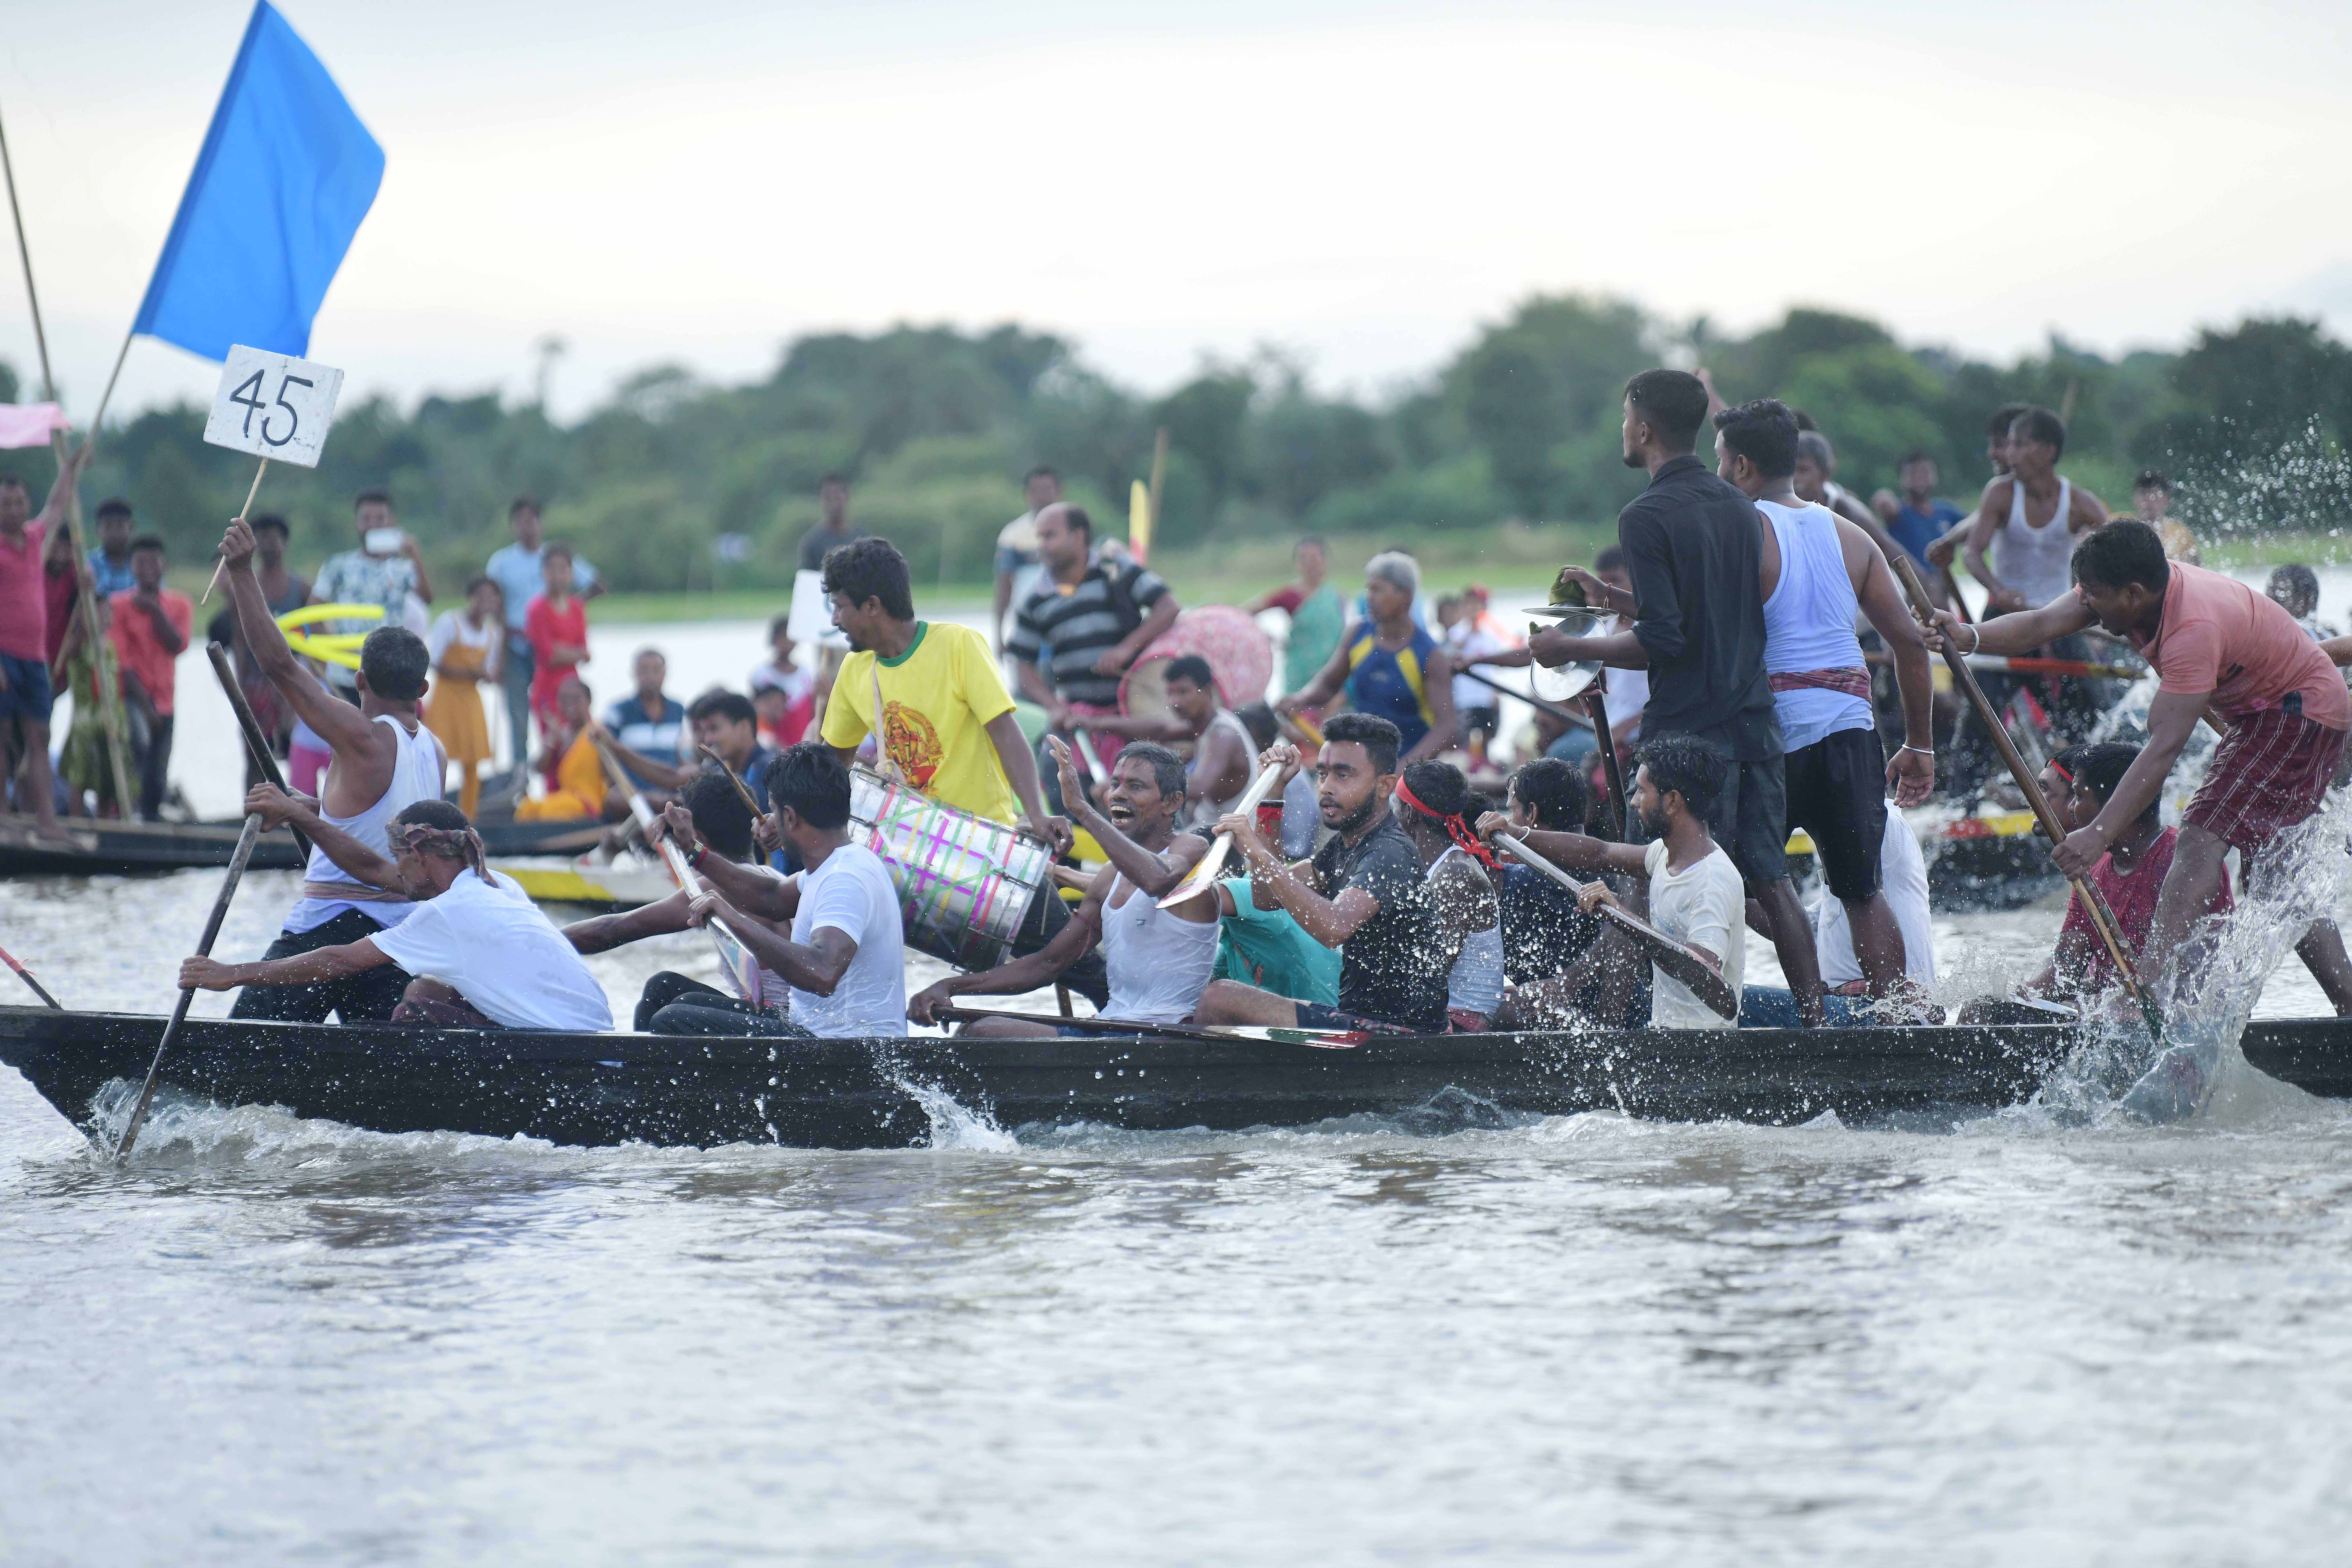 AGARTALA, Penduduk desa berpartisipasi dalam sebuah lomba balap perahu di festival balap perahu tahunan di Danau Rudrasagar, sekitar 55 kilometer dari Agartala, ibu kota Negara Bagian Tripura, India timur laut, pada 12 September 2022. (Xinhua/Str)